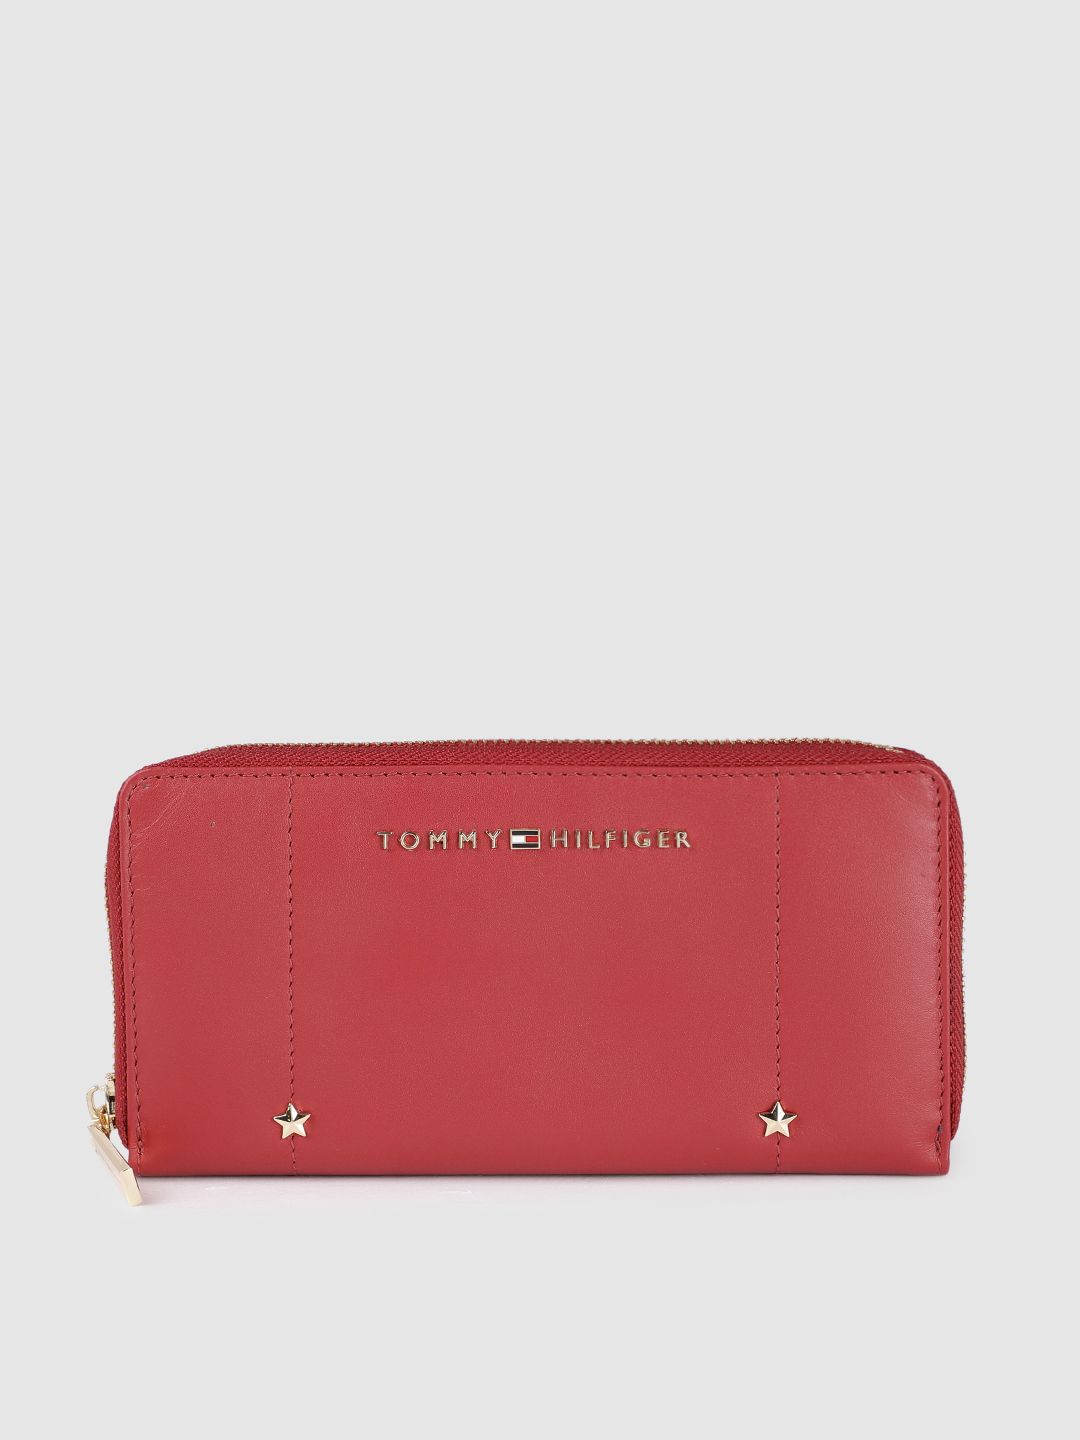 Tommy Hilfiger Women Red Leather Zip Around Wallet Price in India